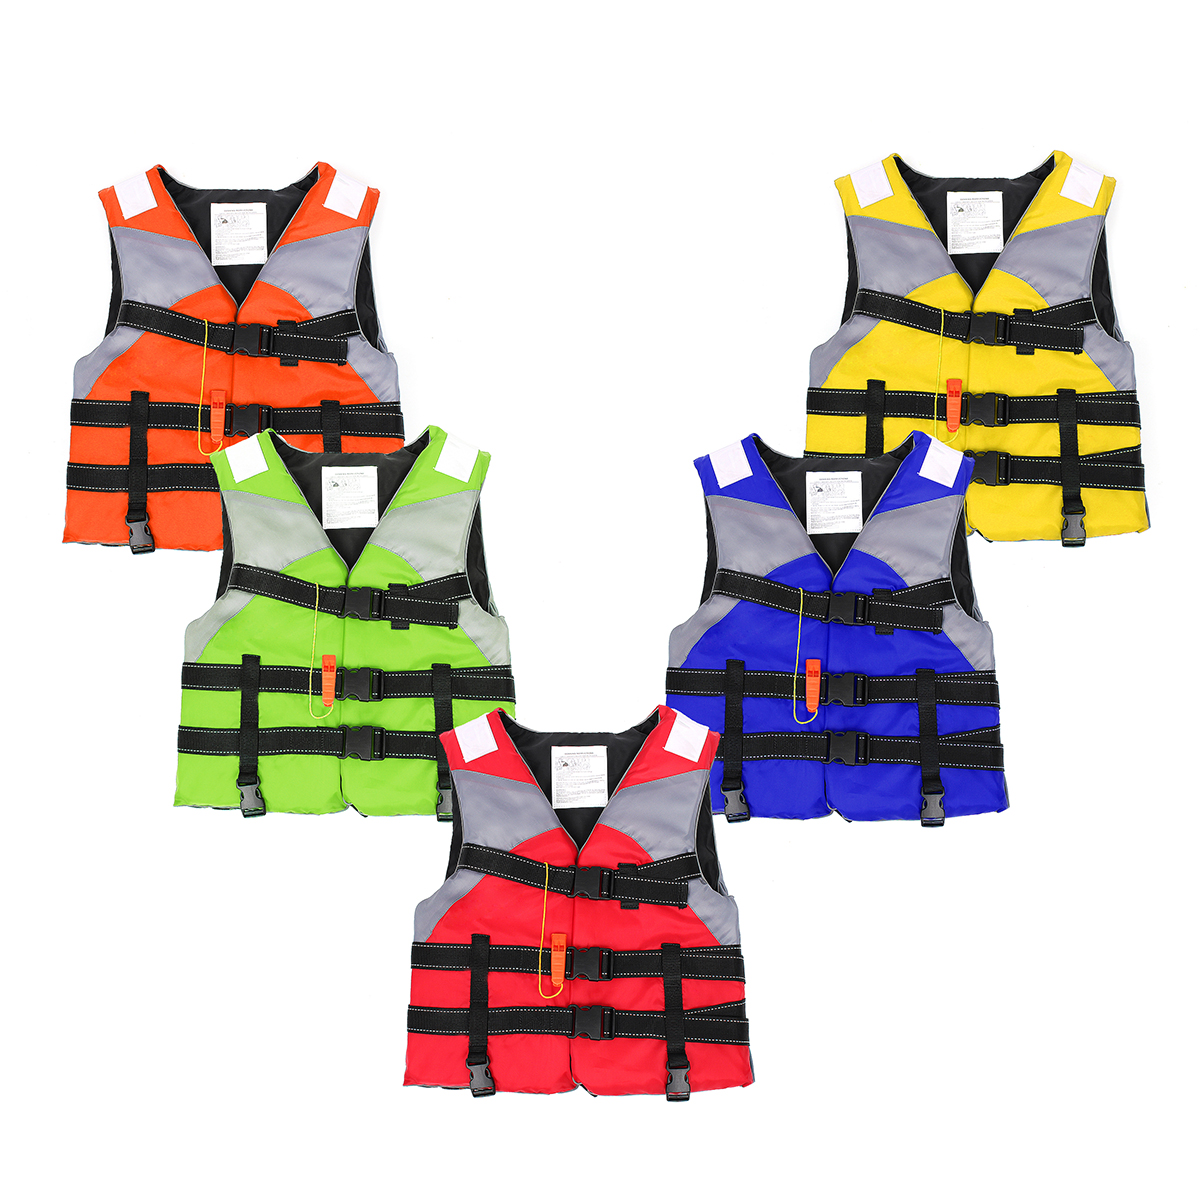 Reflective-Adult-Life-Jacket-Vest-Professional-Fully-Enclosed-Water-Sports-Safty-Aid-Swimwear-Fishin-1640049-3